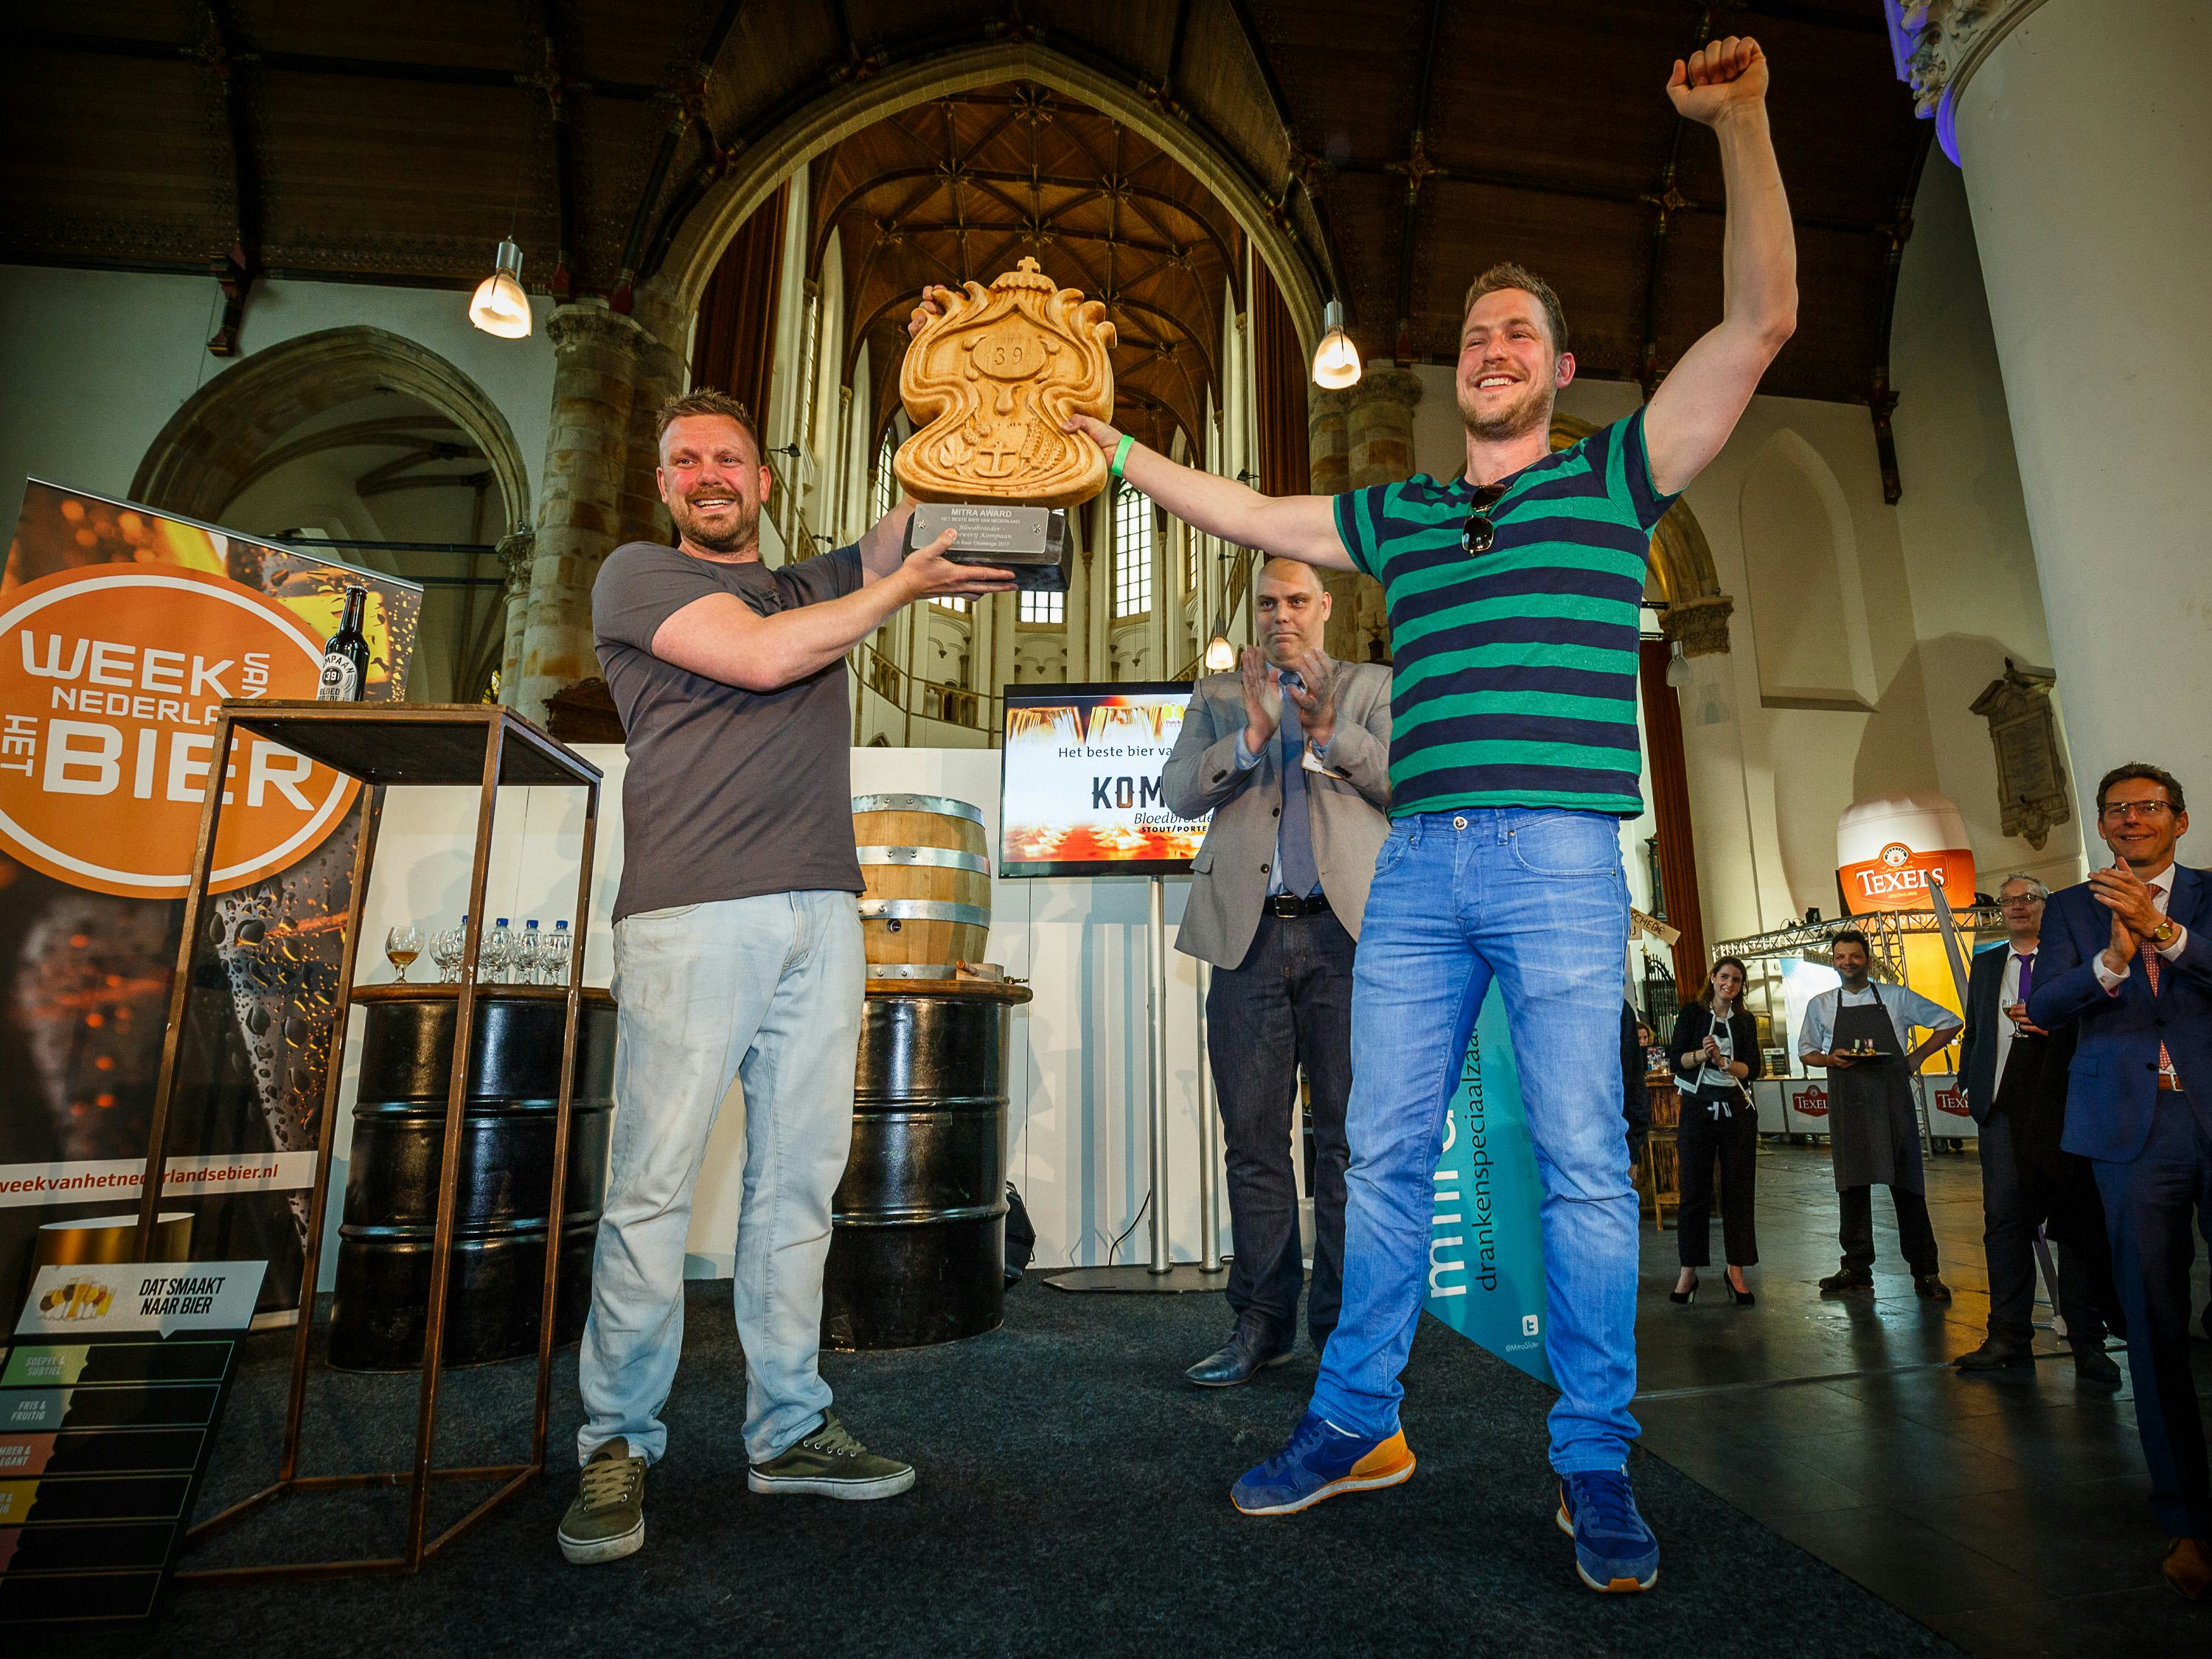 'Bloedbroeder' van Kompaan is Beste Bier van Nederland